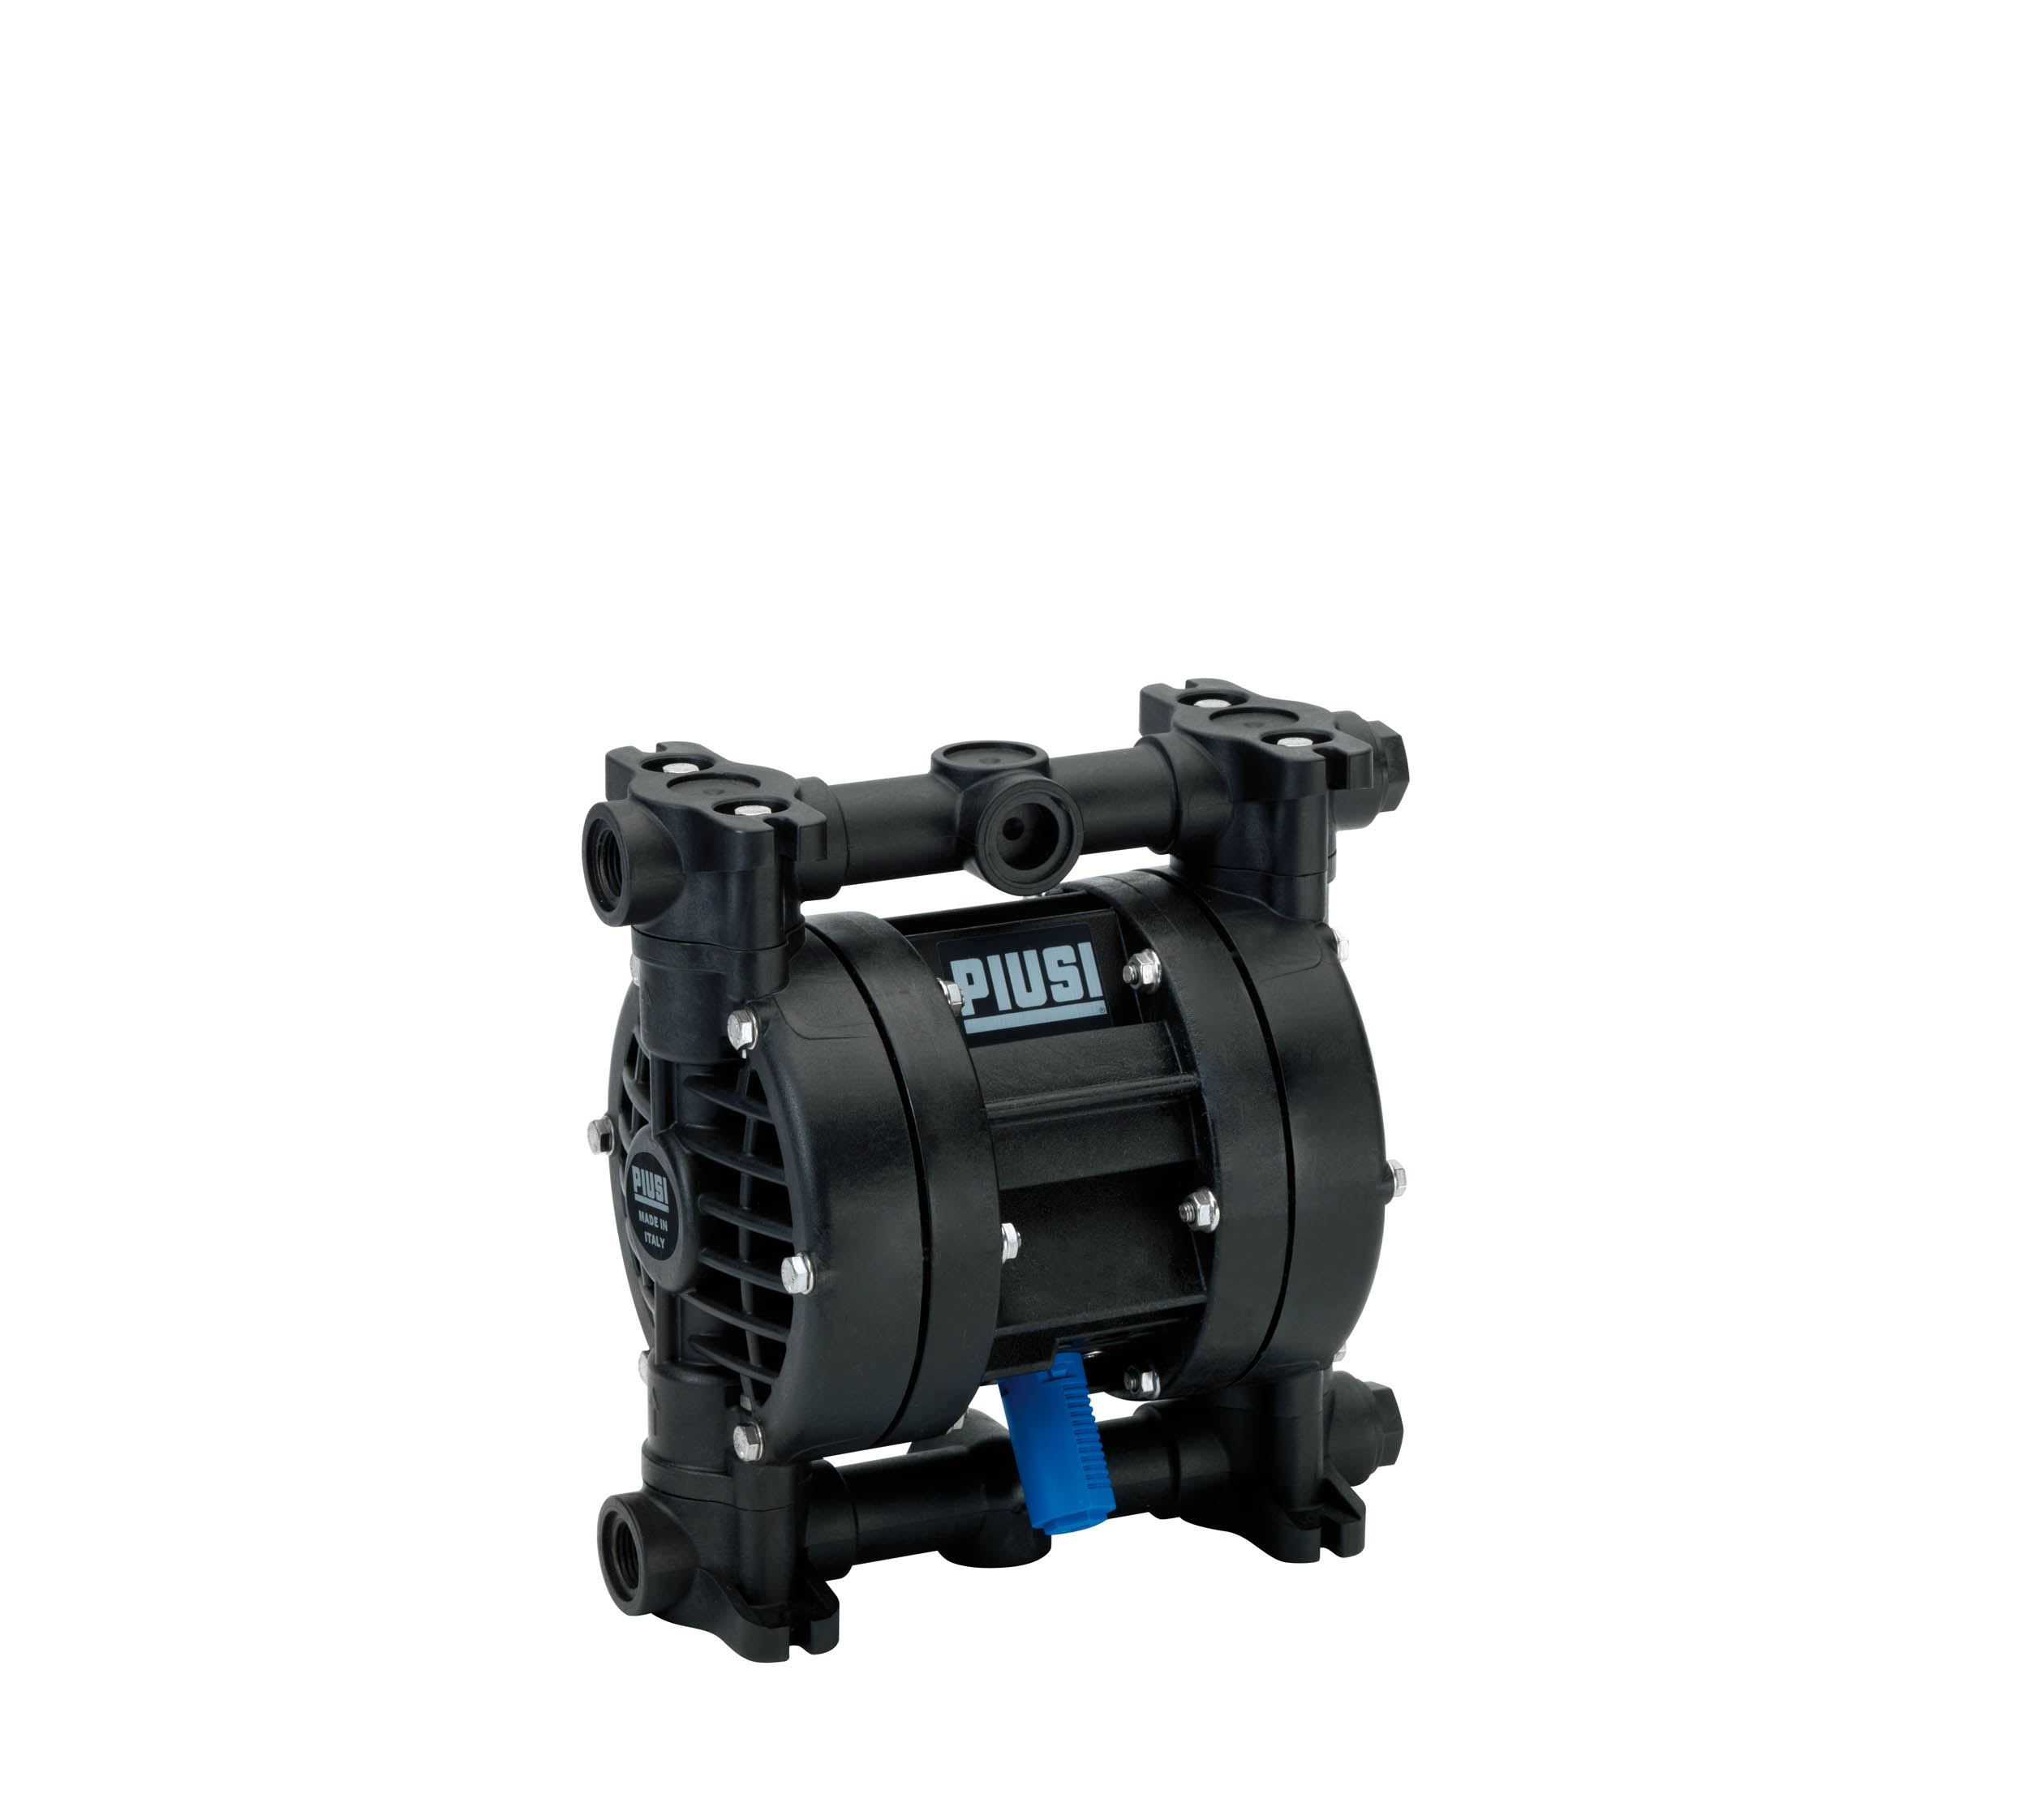 Piusi ATEX-Druckluftmembranpumpe MP130, 50 l/min - F00208P00